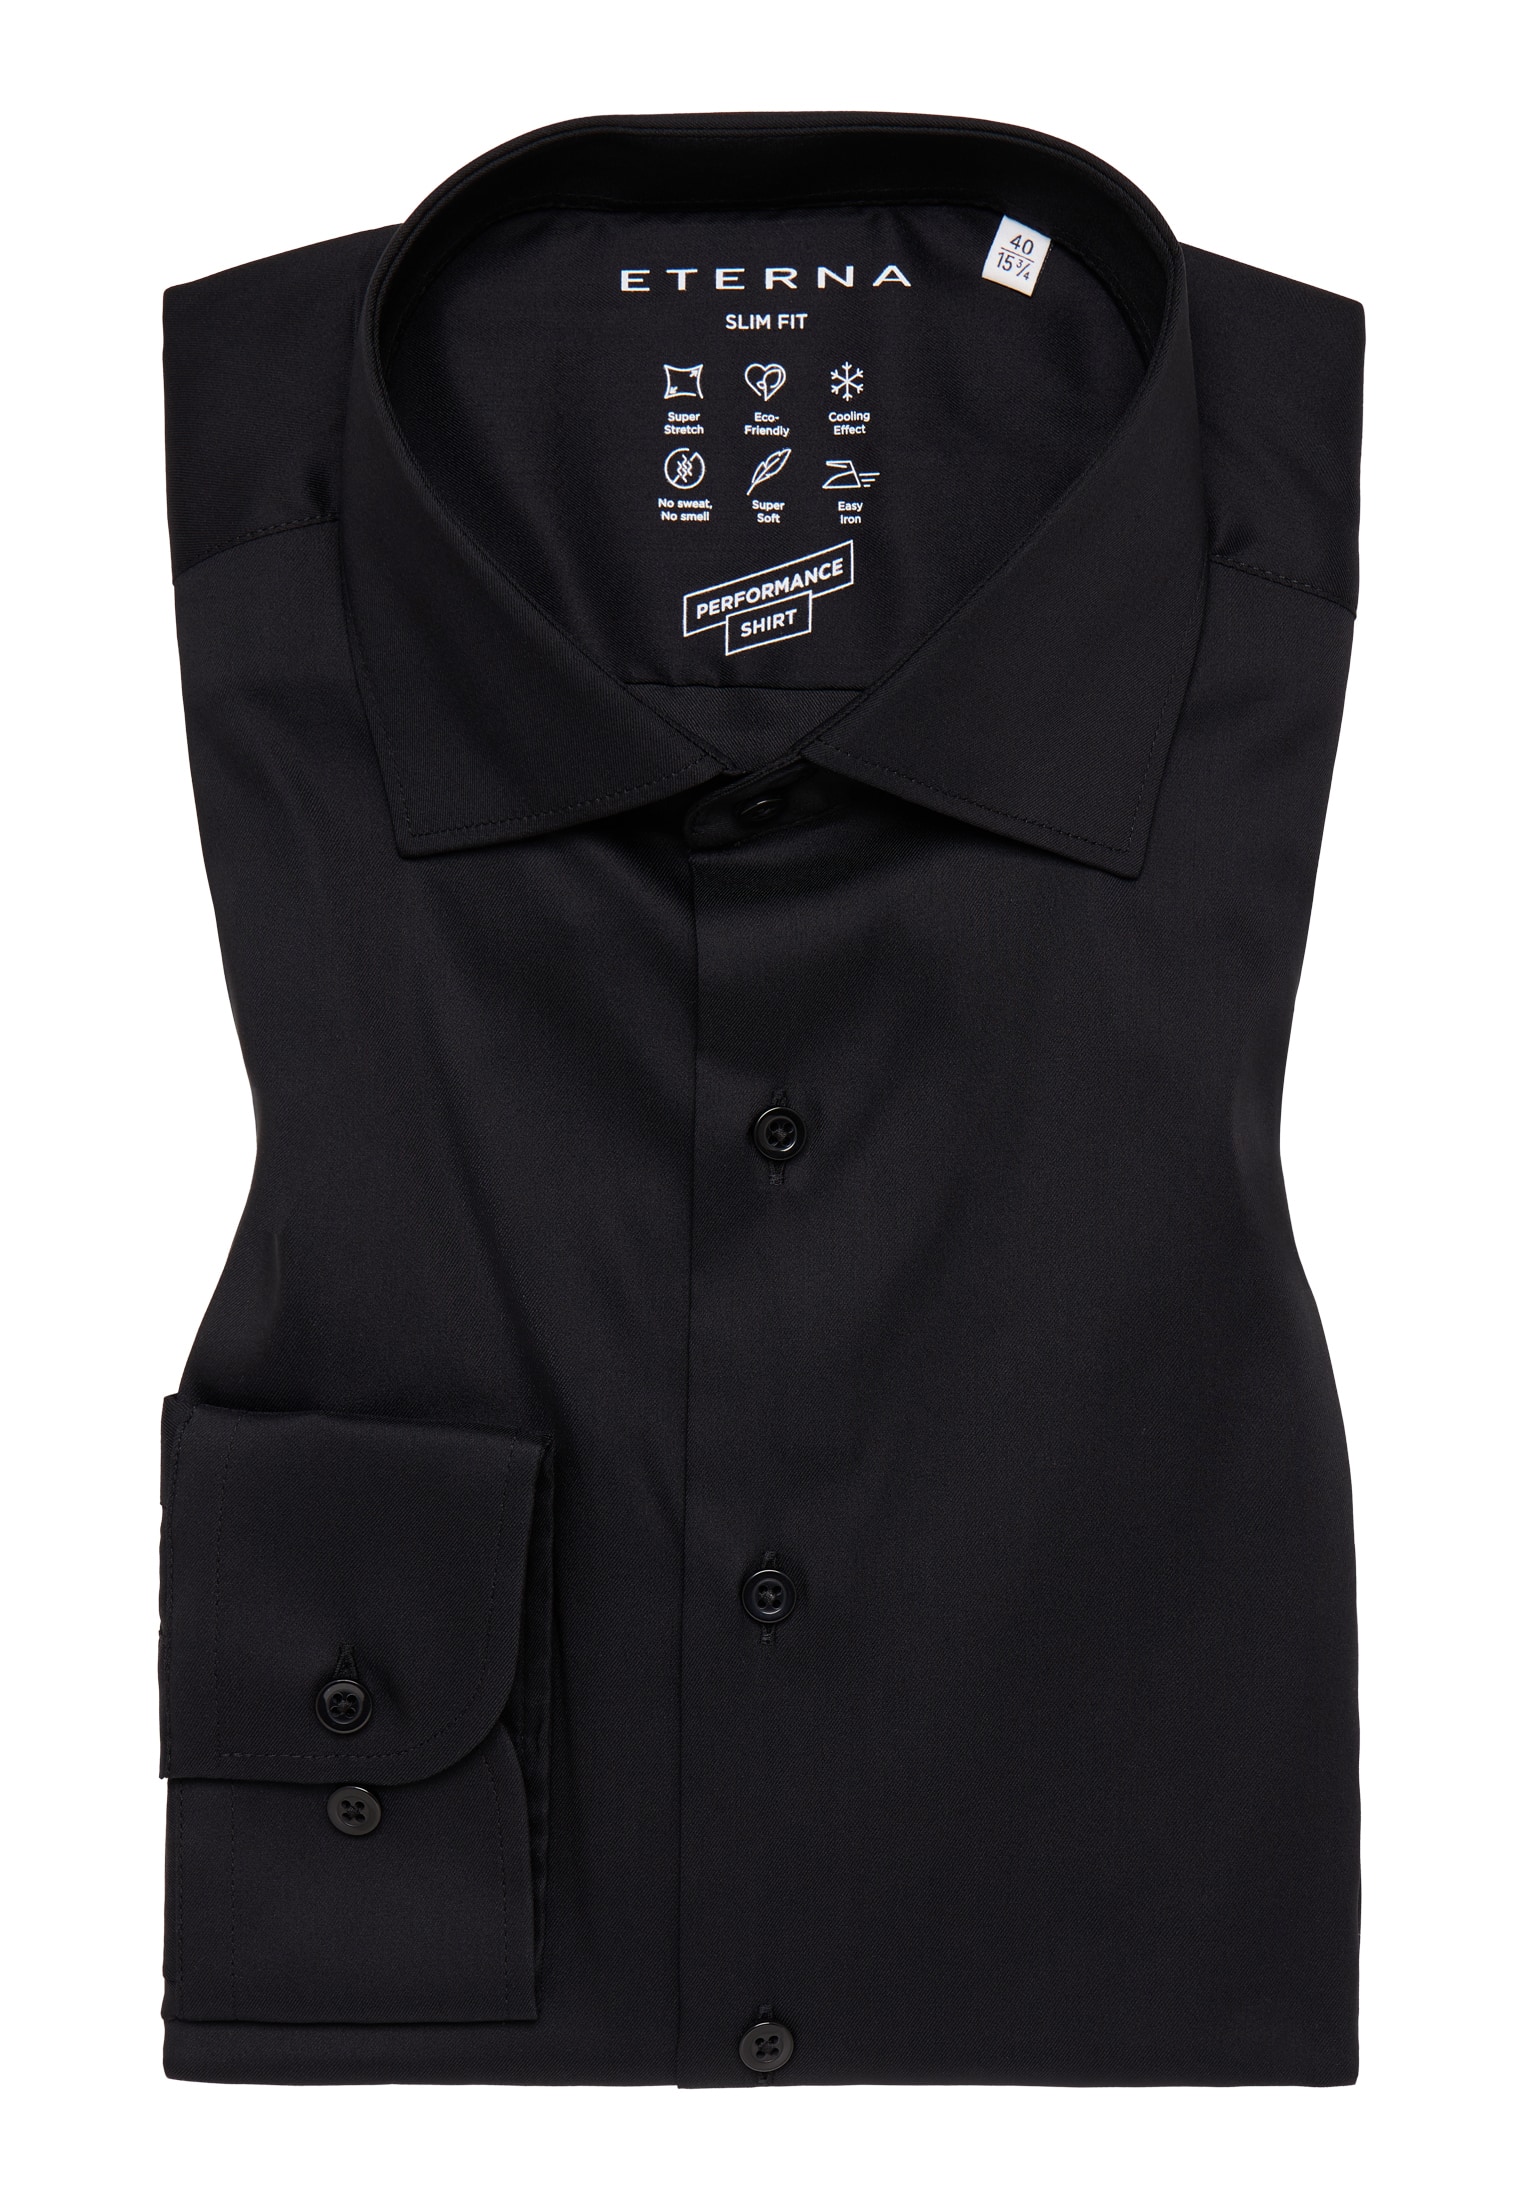 | Shirt FIT | | Performance 38 in SLIM long plain 1SH02217-03-91-38-1/1 sleeve black | black